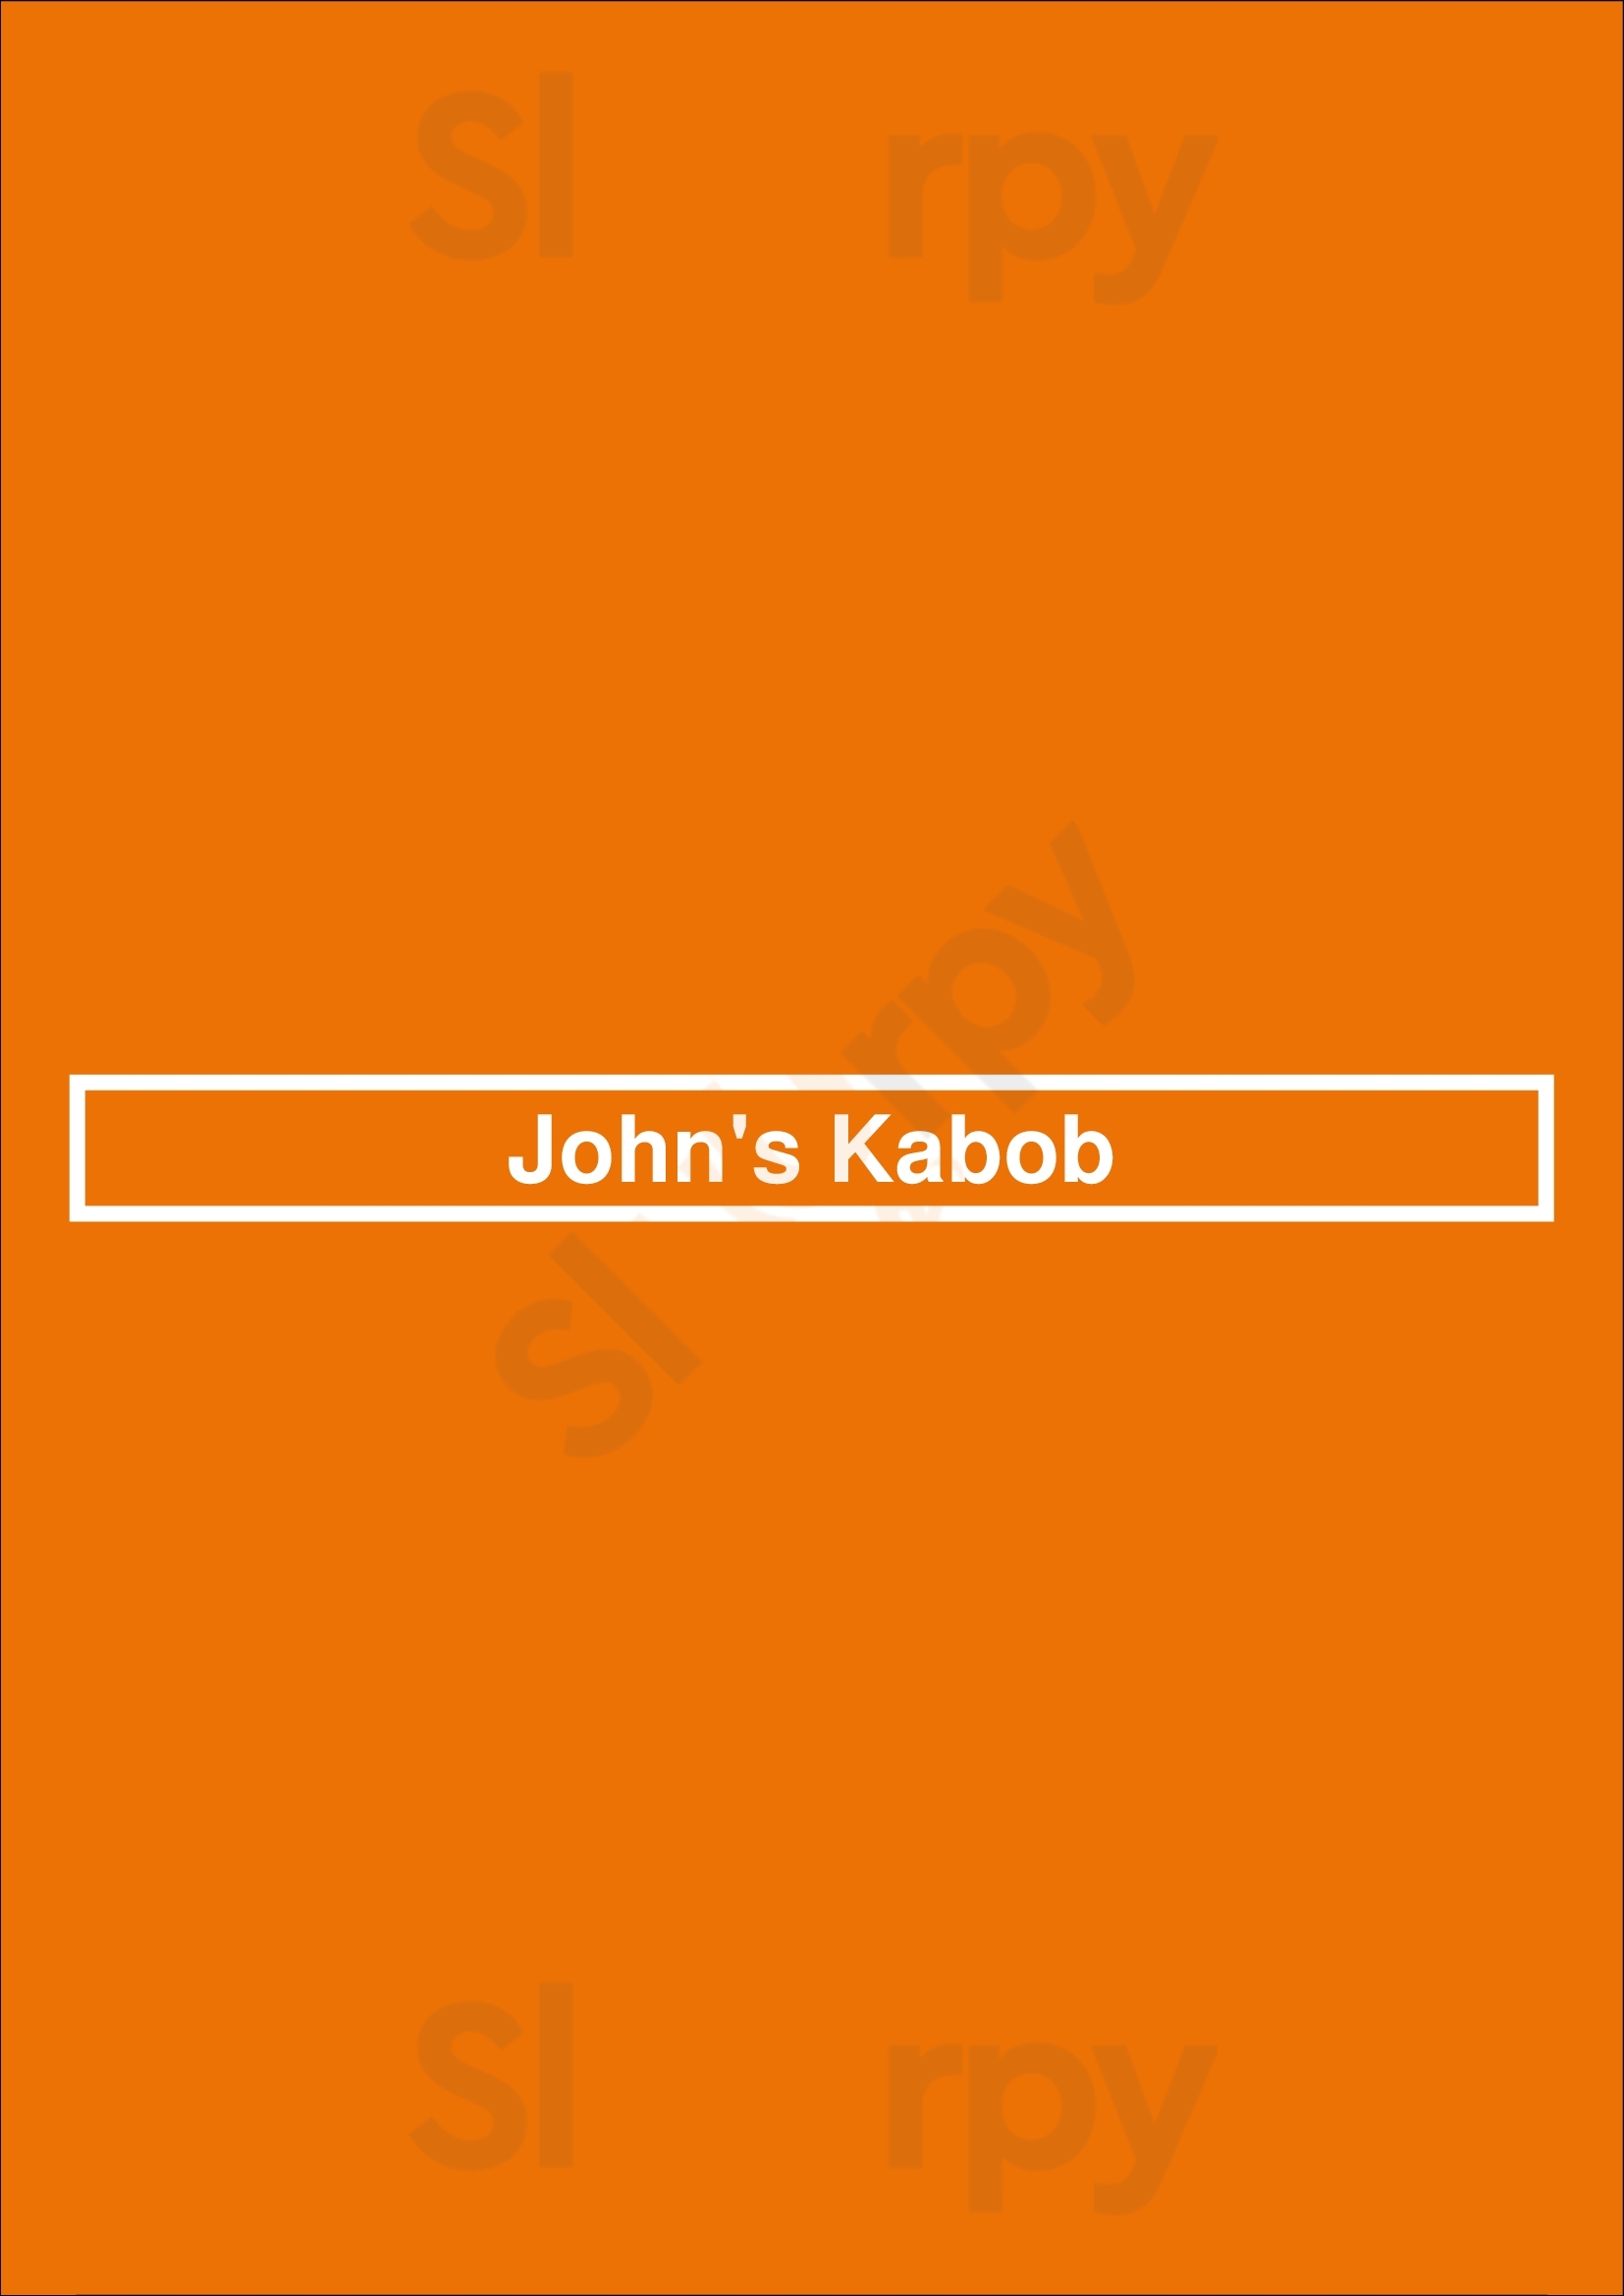 John's Kabob Monterey Park Menu - 1